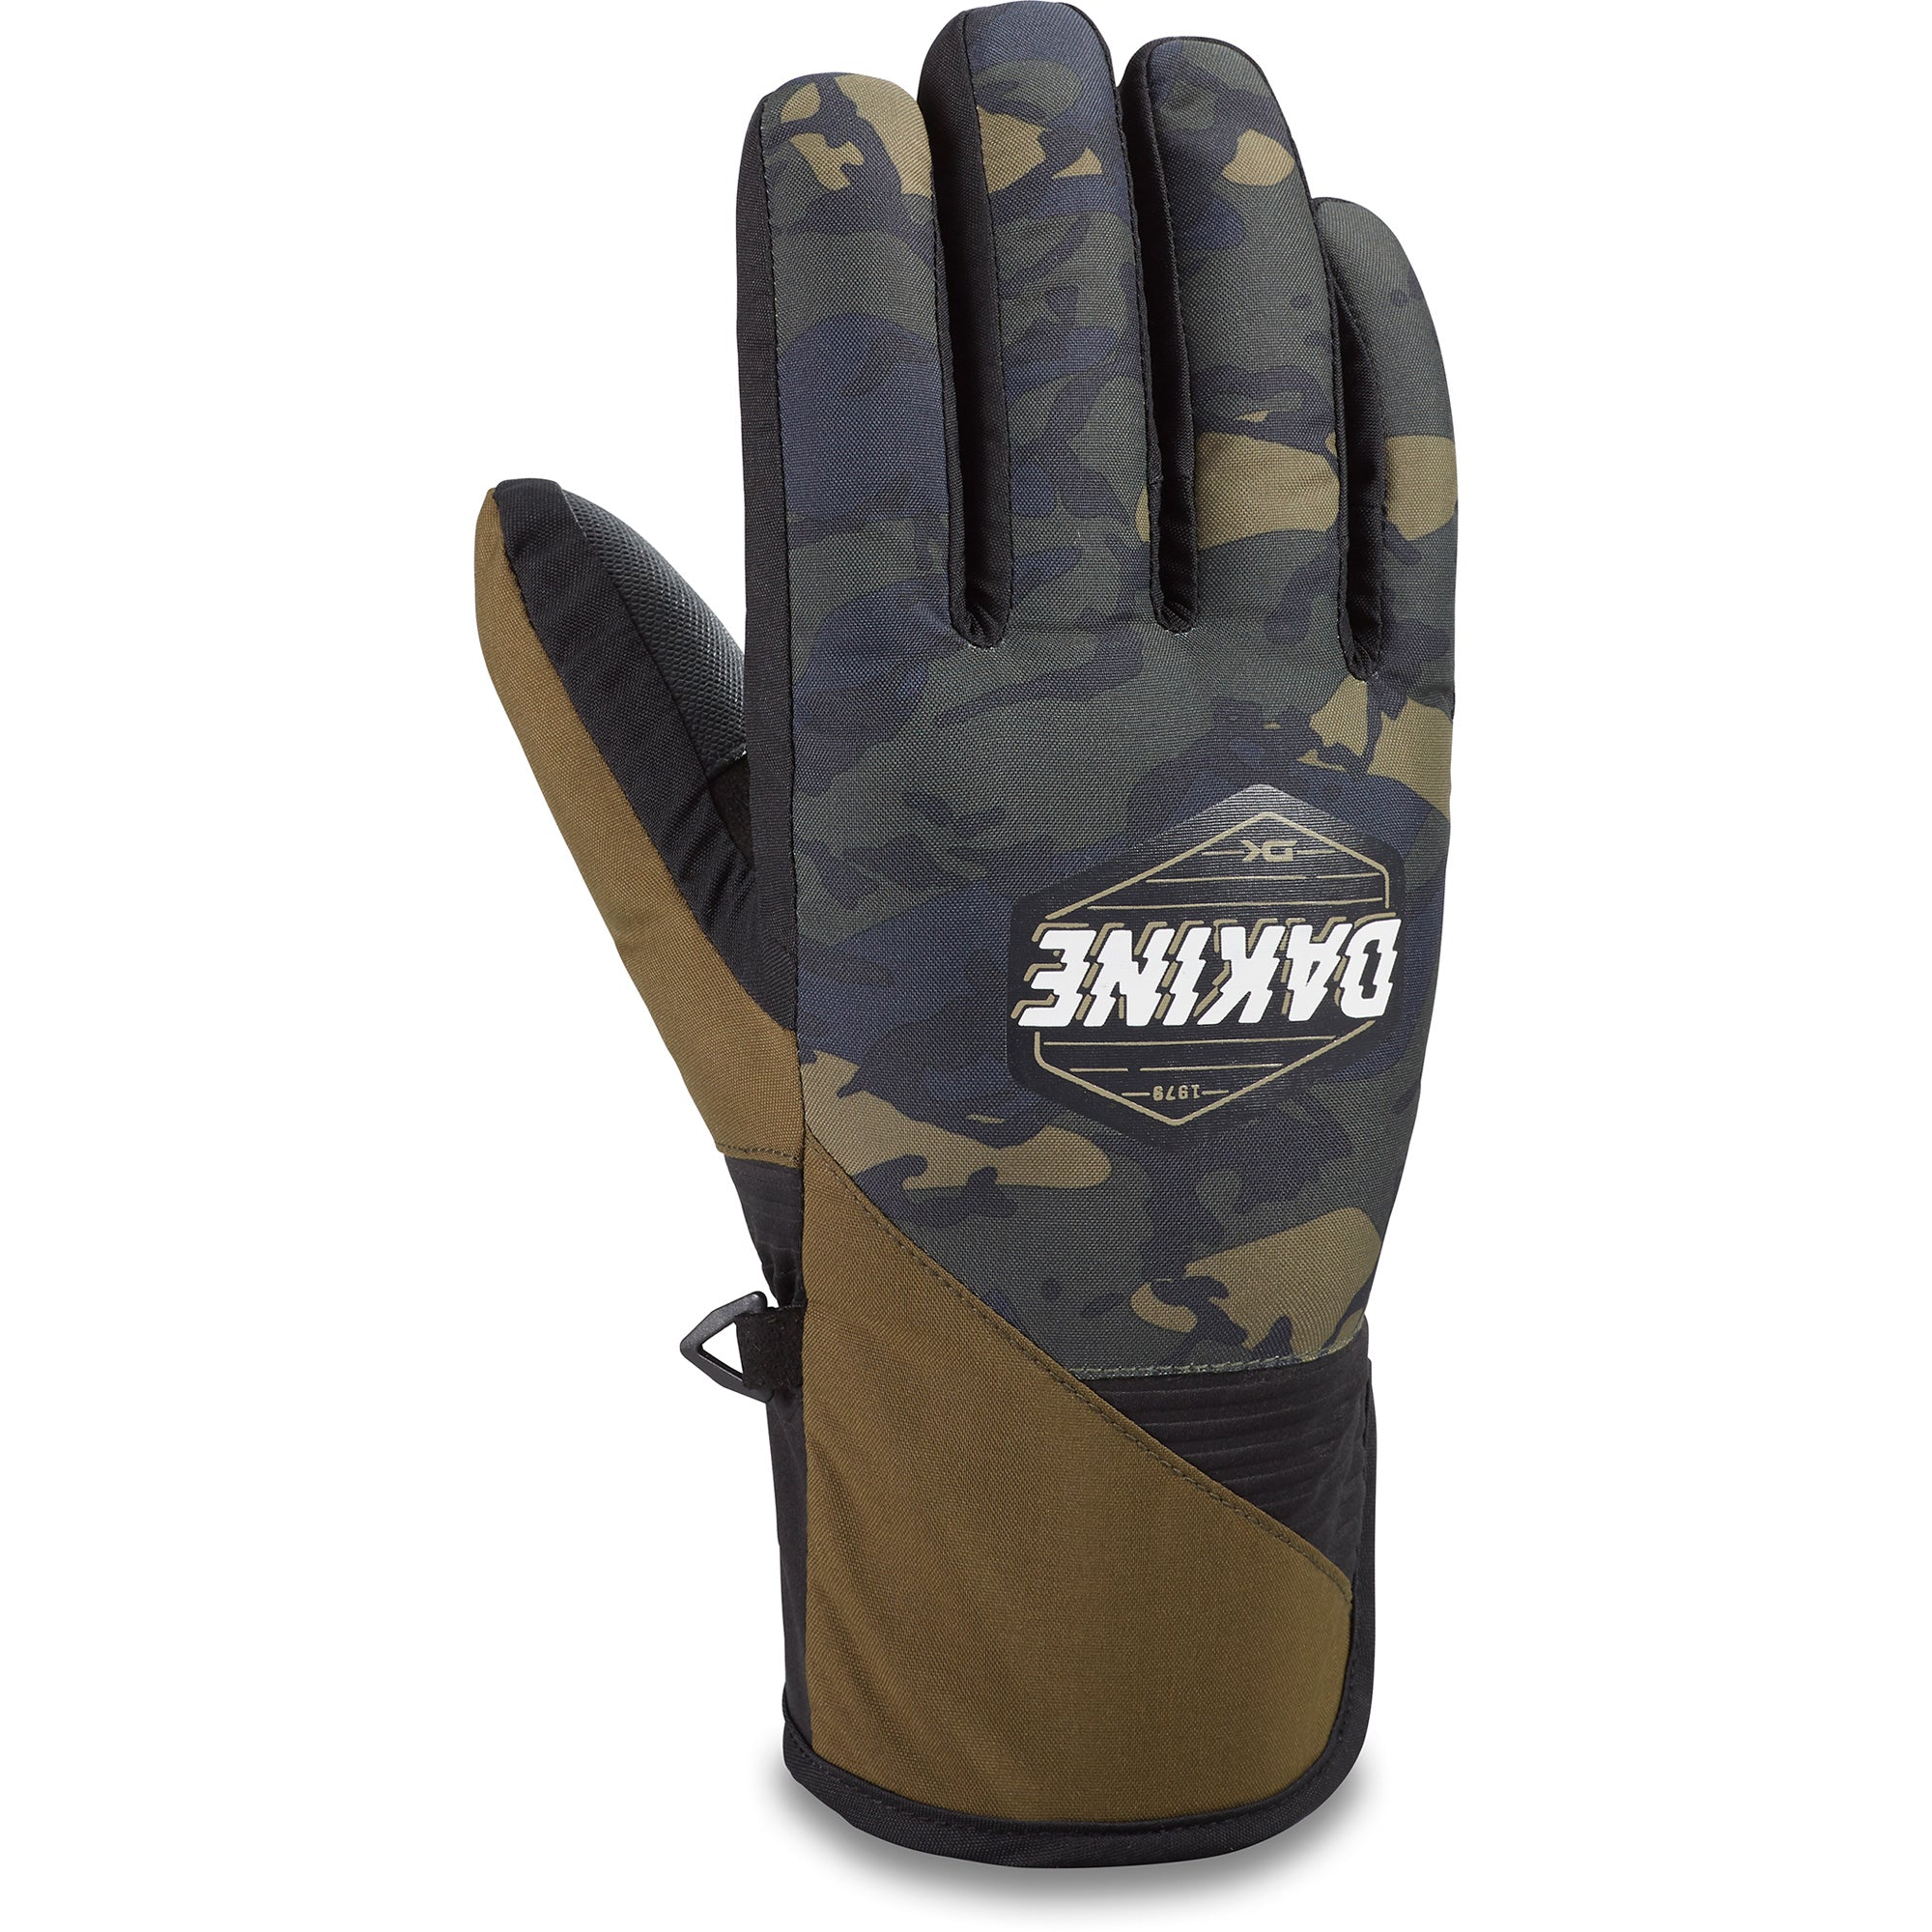 Level Ranger noir mountain gants de ski homme Textile tech Gants  –  HawaiiSurf